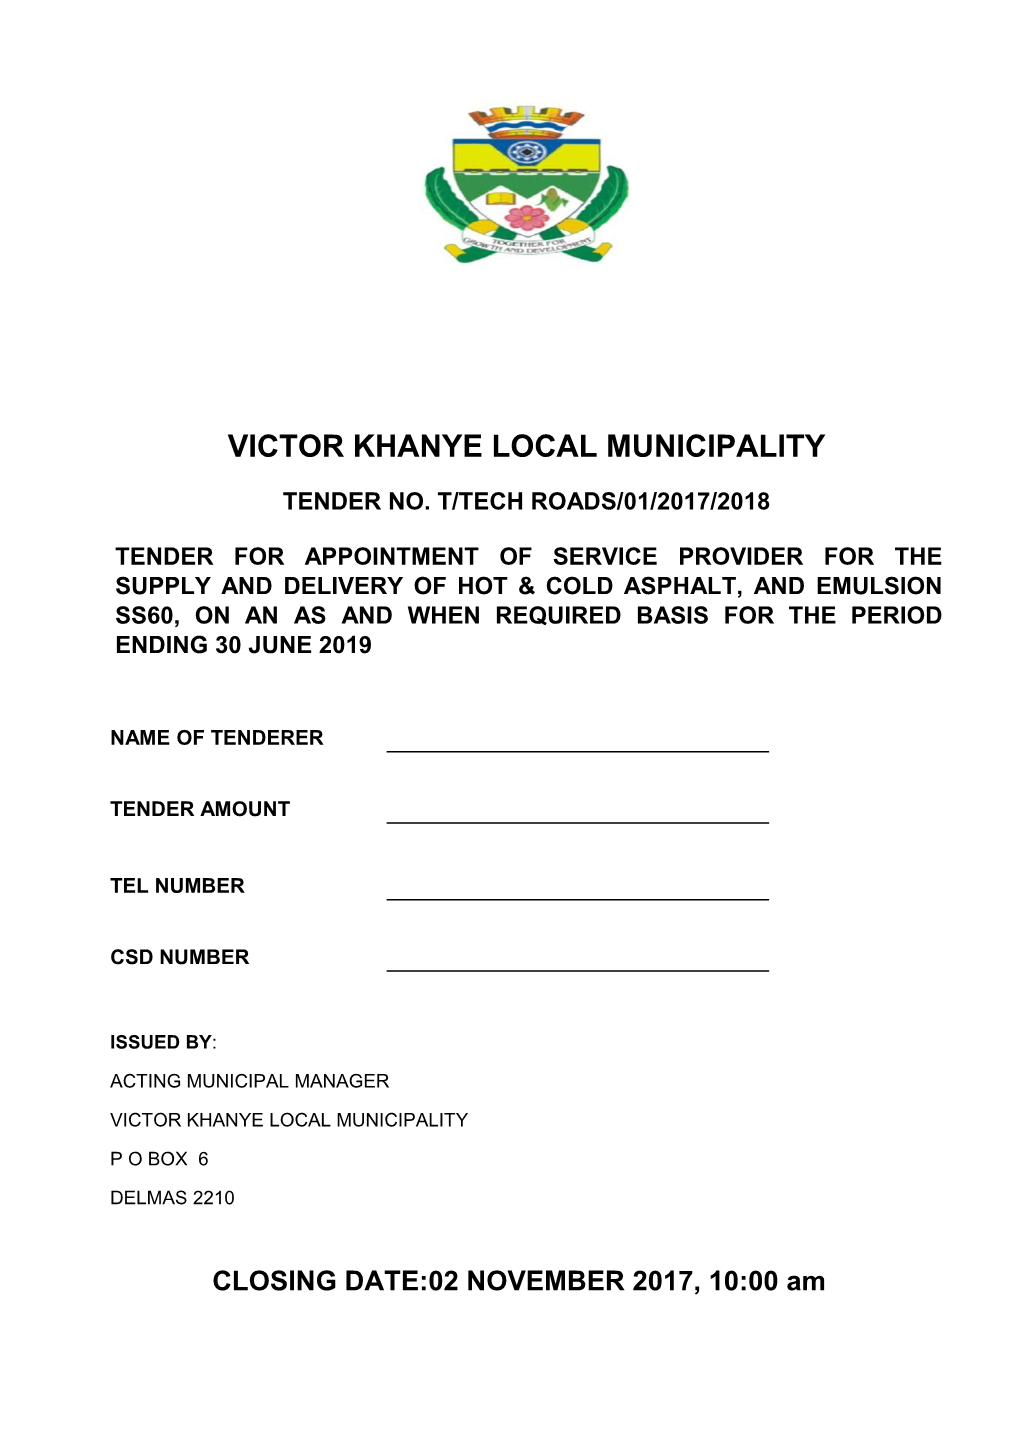 Victor Khanye Local Municipality